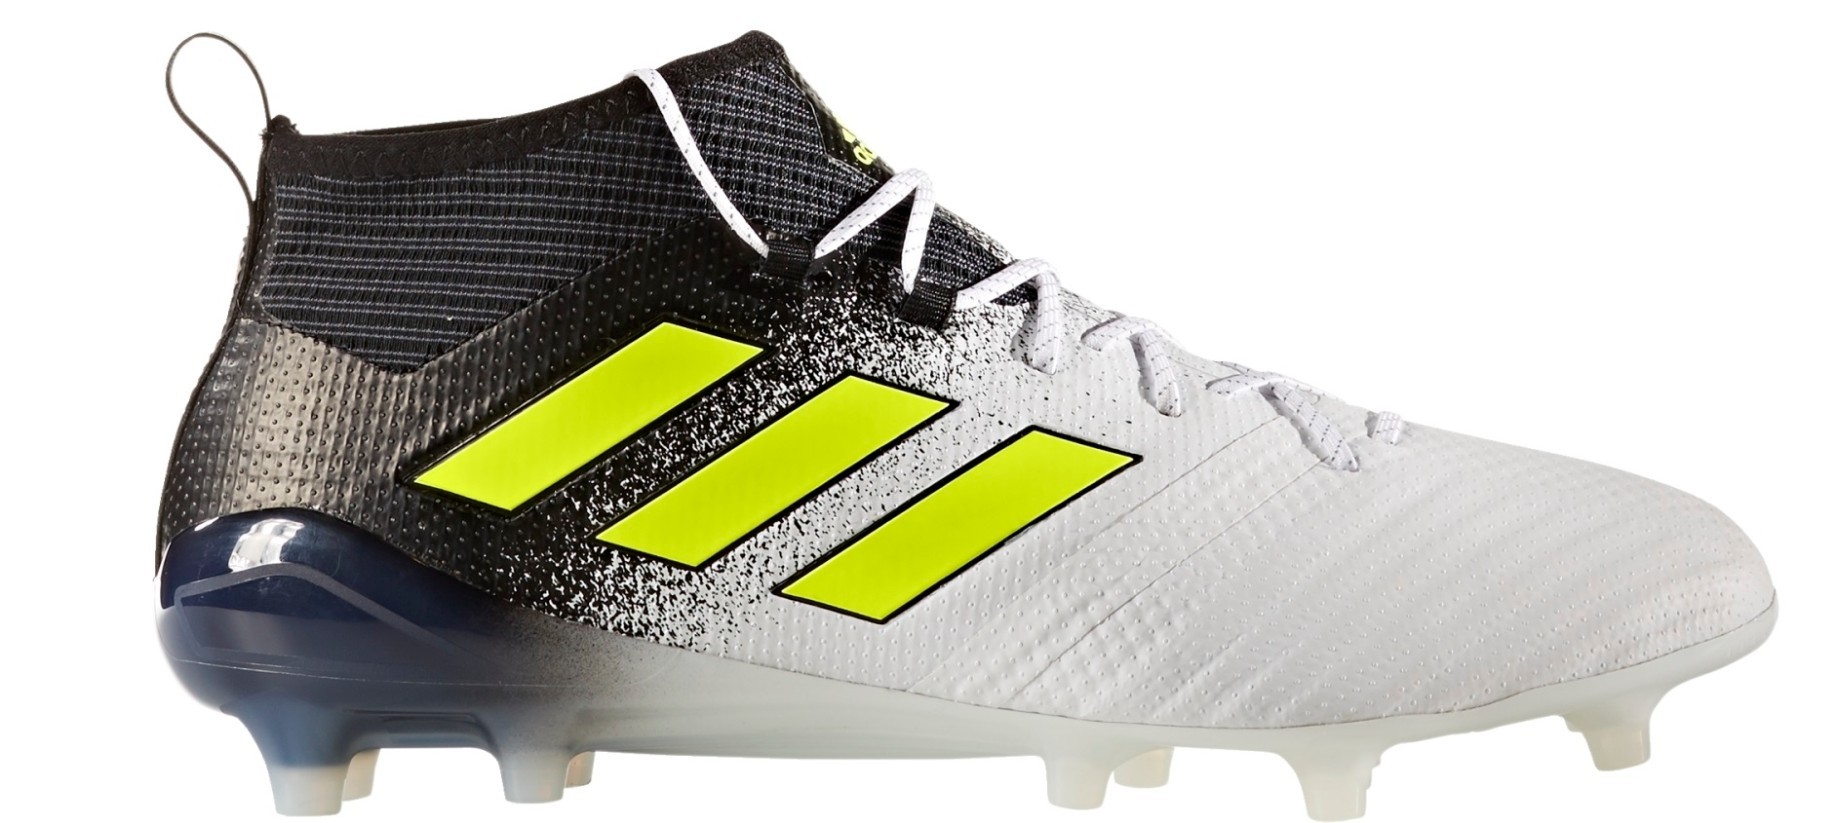 Equipo frecuentemente Contable Botas de Fútbol Adidas Ace 17.1 FG Tormenta de Polvo Pack colore blanco  negro - Adidas - SportIT.com